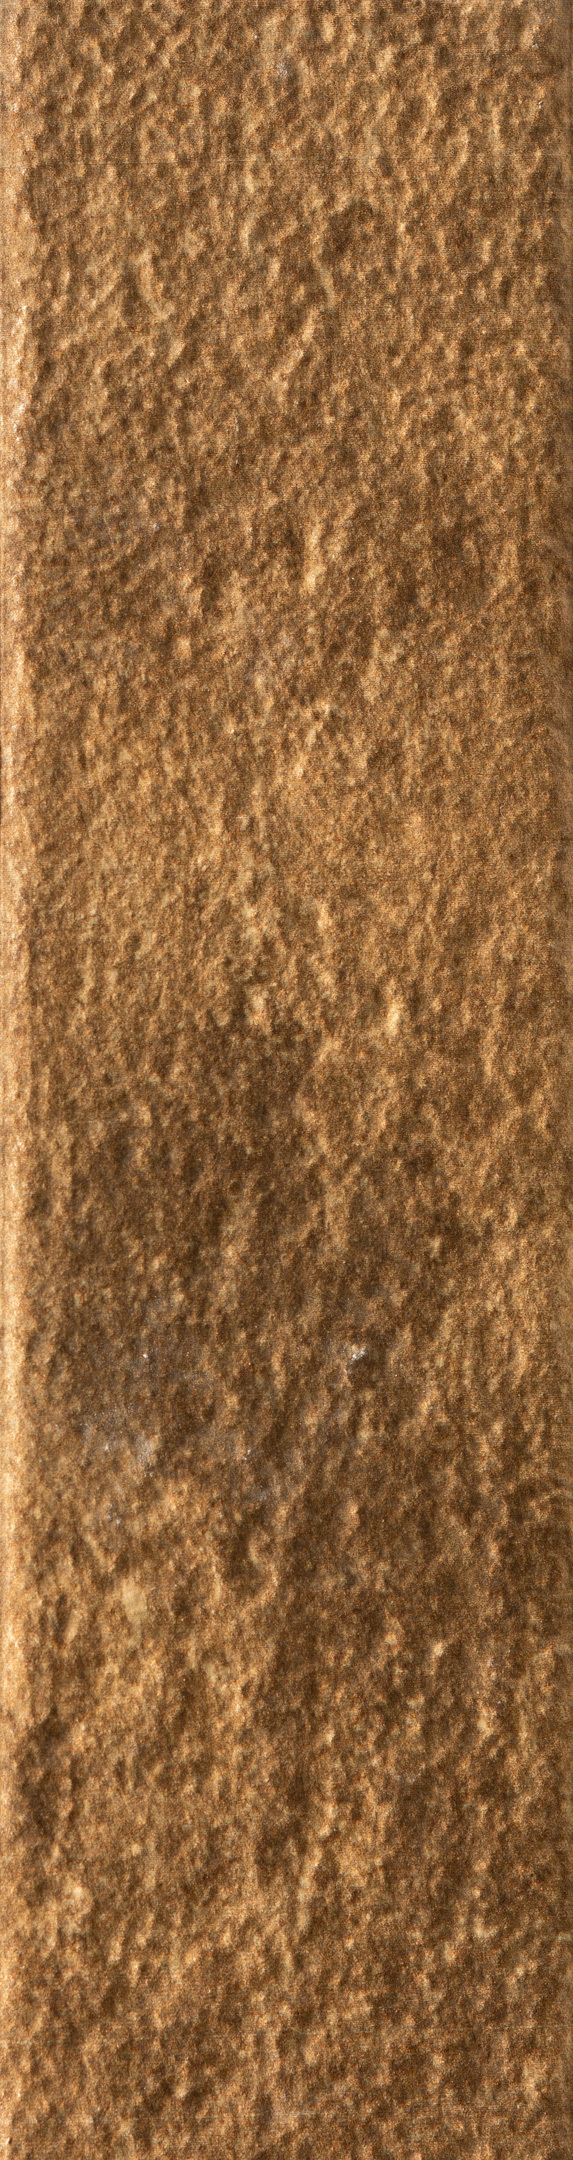 Клинкерная плитка Керамин Теннесси светло-коричневая 245х65х7 мм (34 шт.=0,54 кв.м) клинкерная плитка керамин мичиган 7 белая 245х65х7 мм 34 шт 0 54 кв м